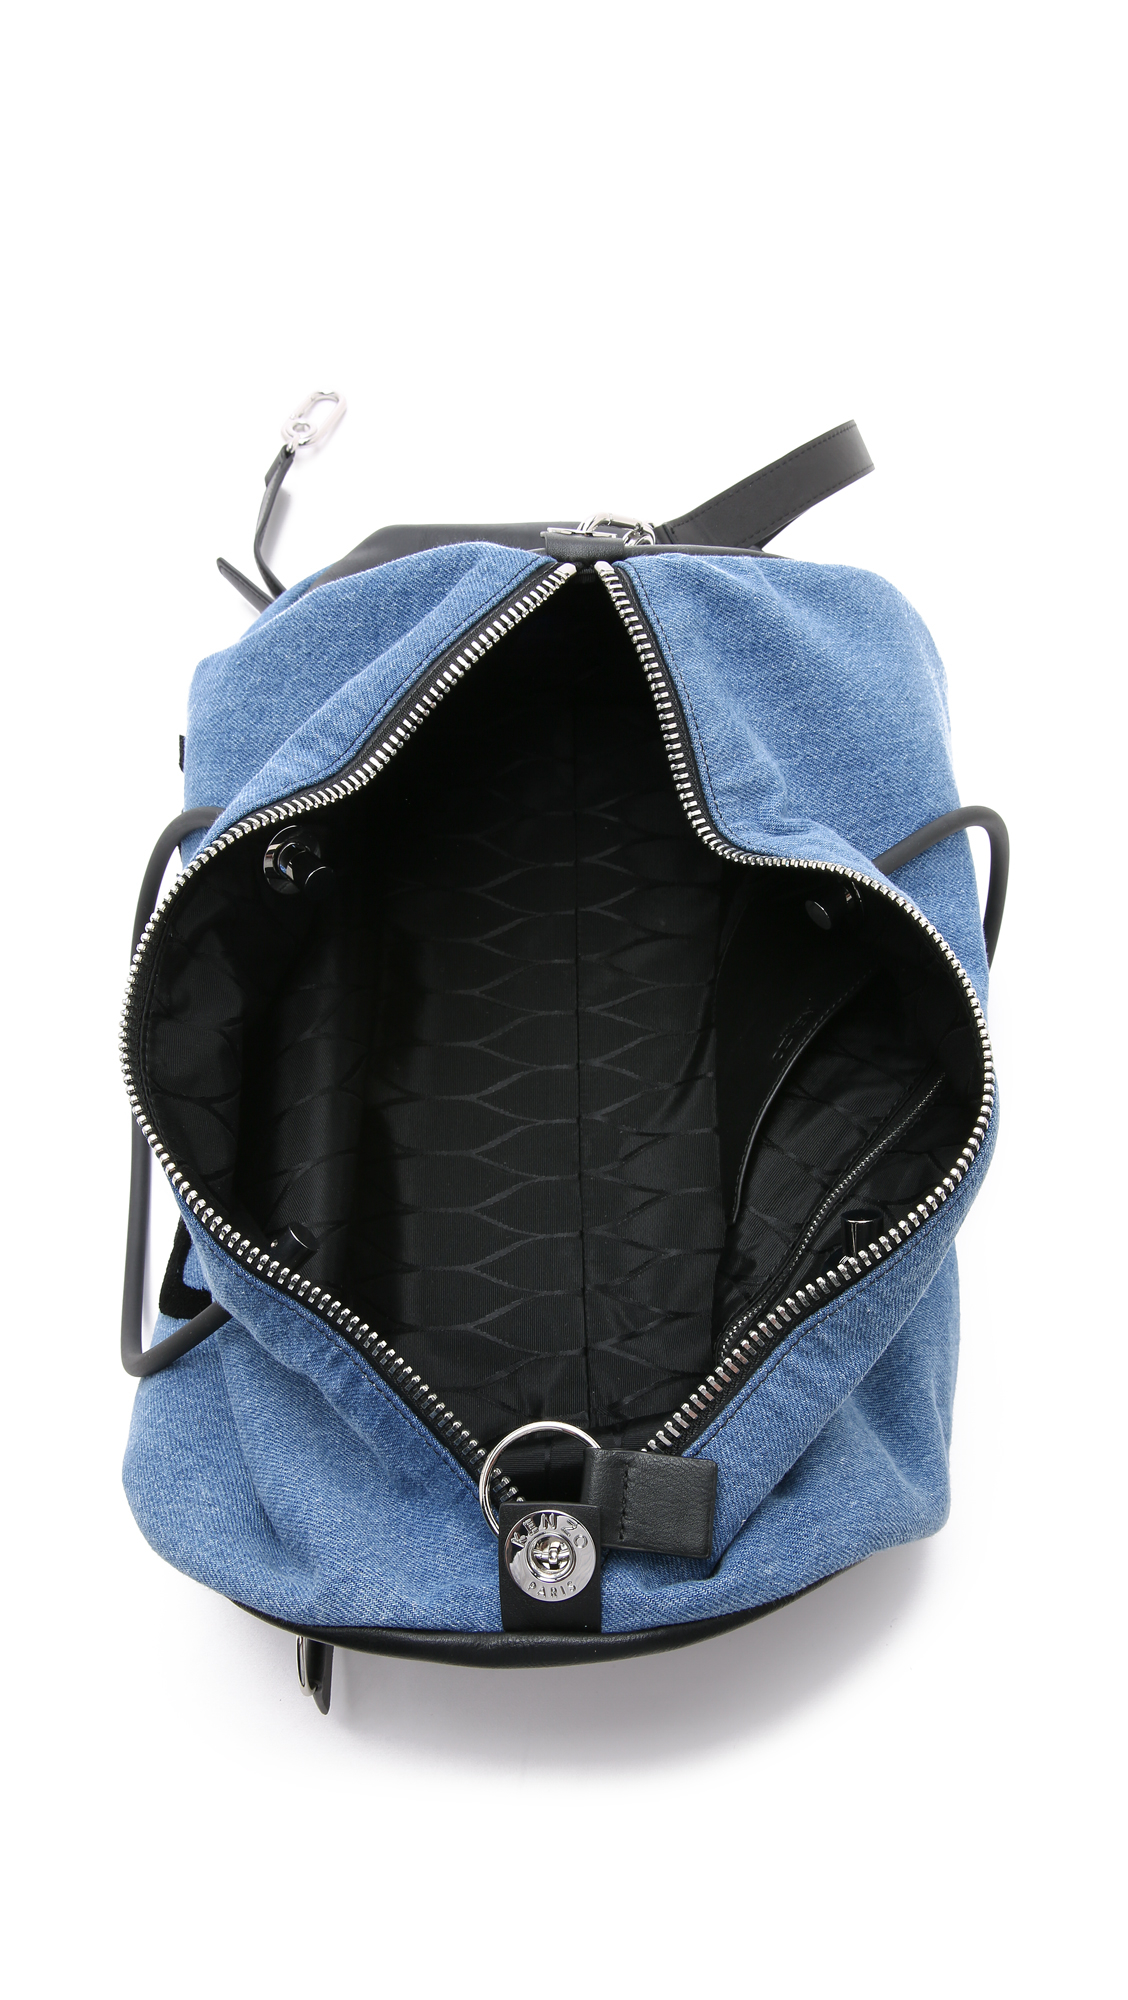 Lyst - Kenzo Denim Duffel Bag - Cobalt in Blue